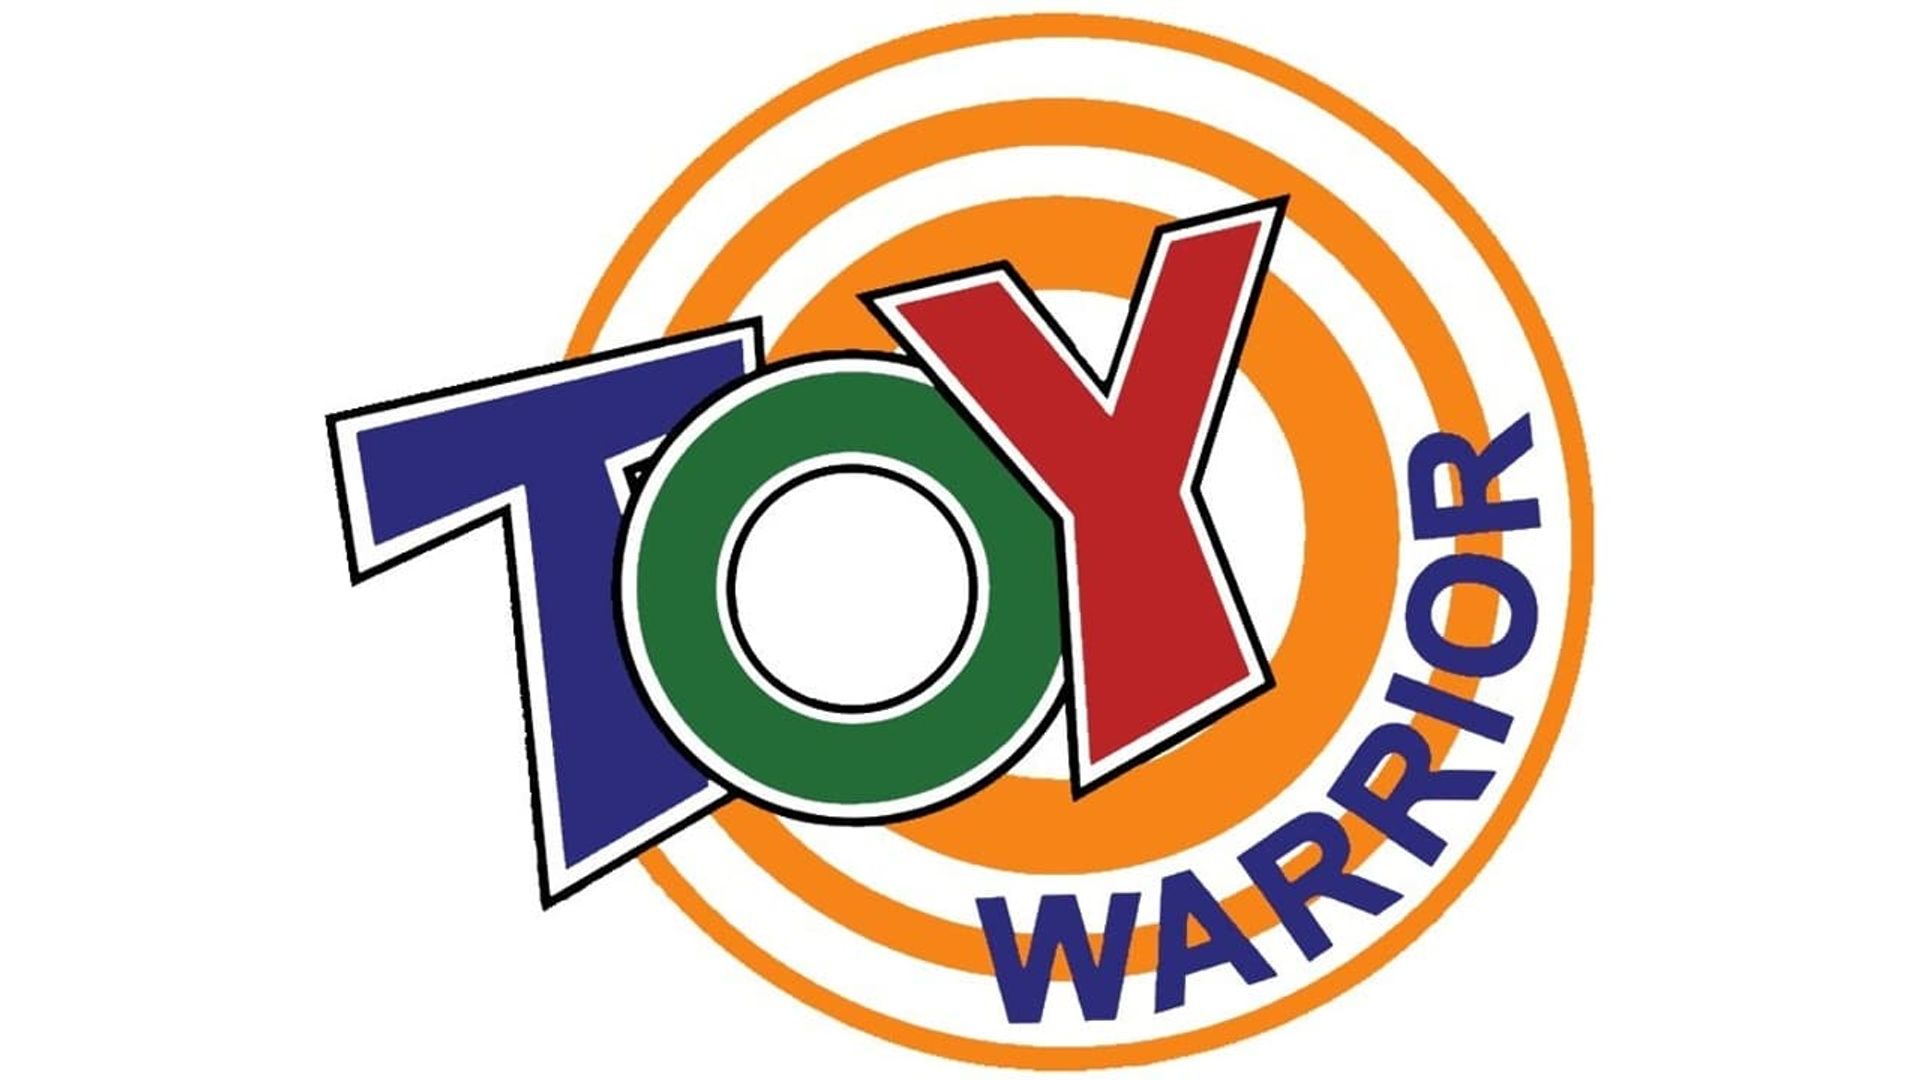 The Toy Warrior background